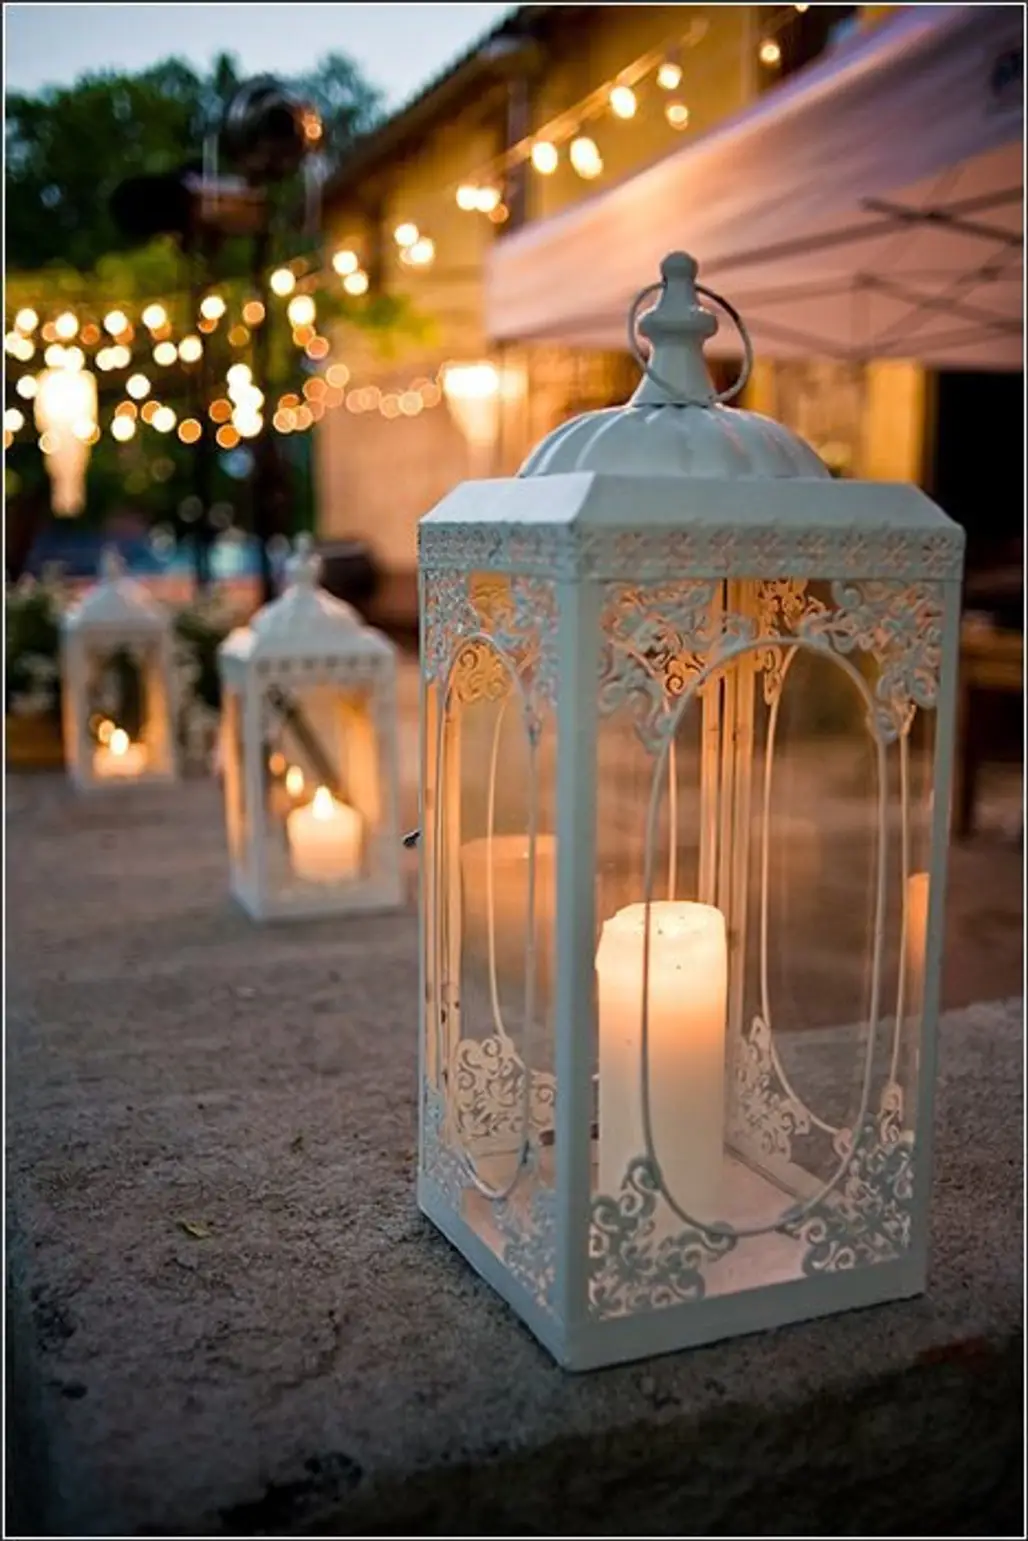 Lanterns Add a Romantic, Whimsical Feel